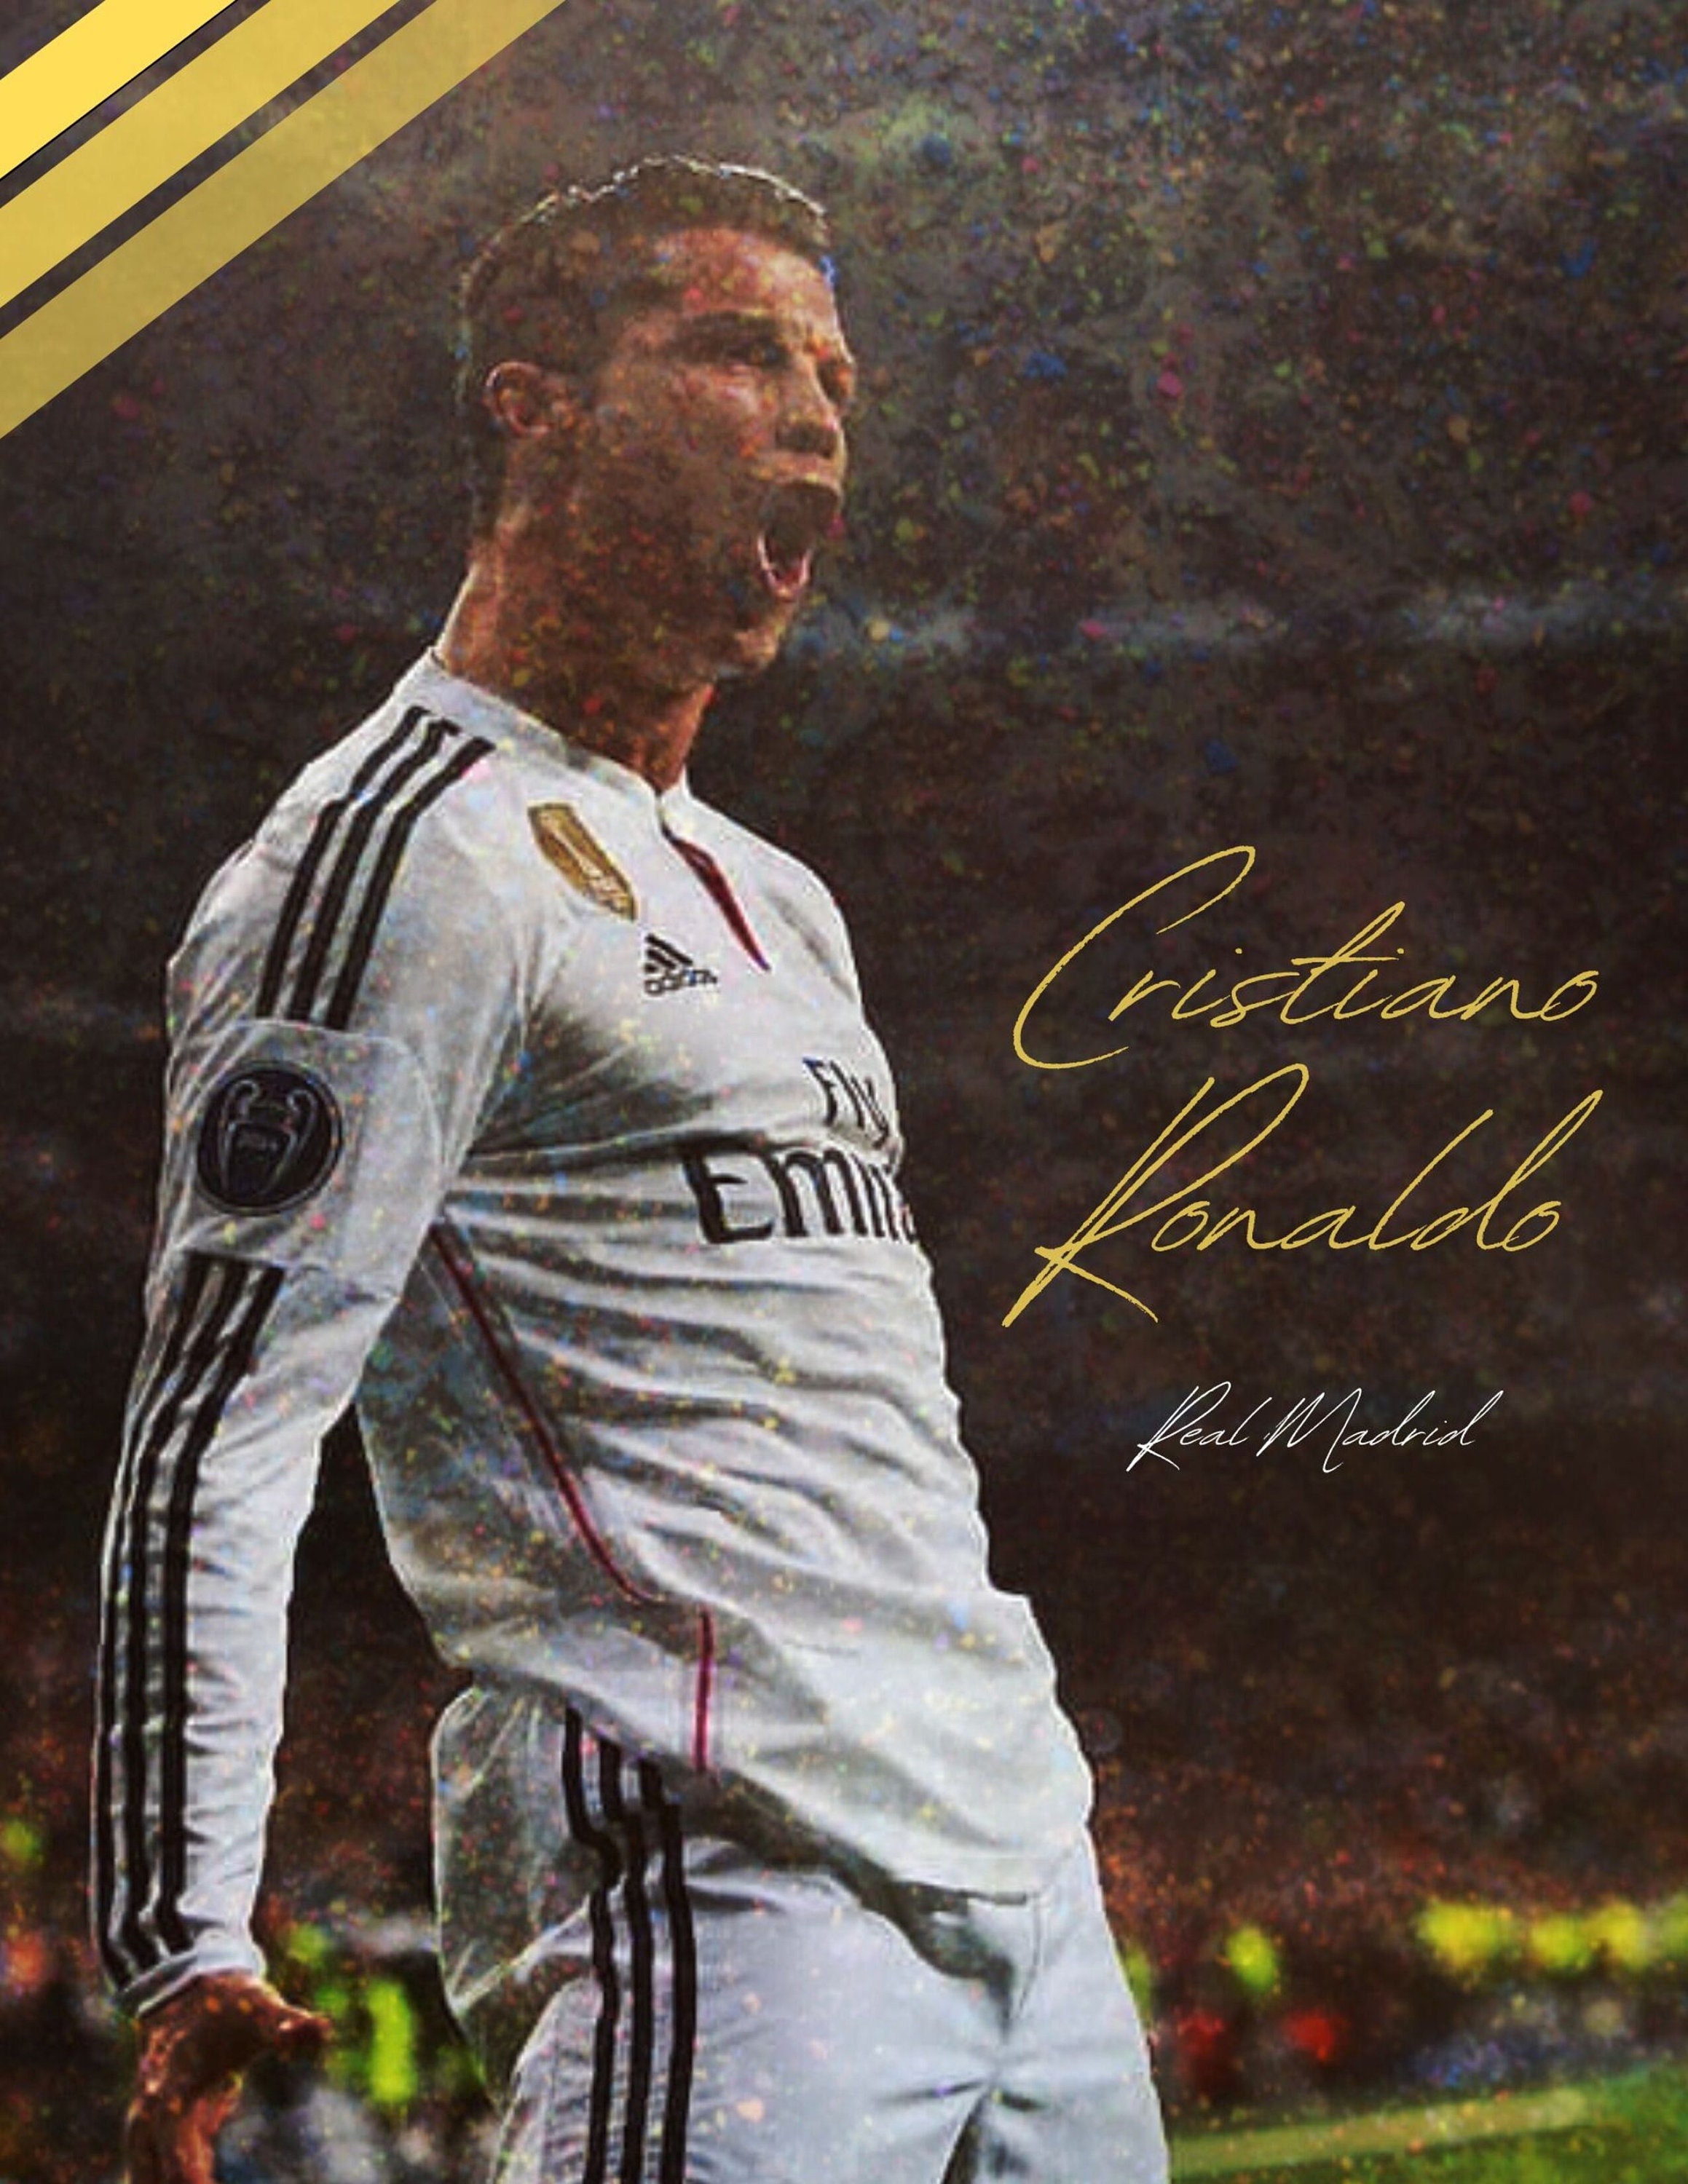 Real Madrid - Cristiano Ronaldo Mini Poster Limited Signature